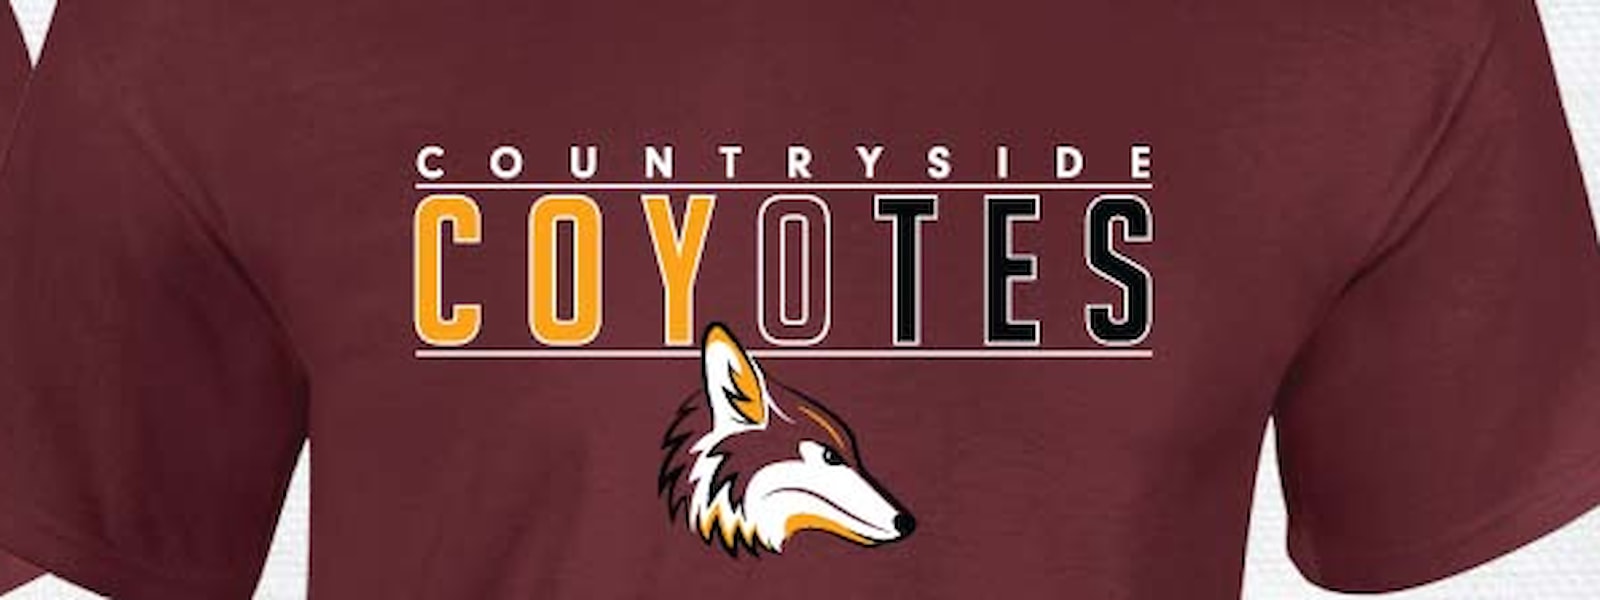 Countryside Coyotes spirit shirt